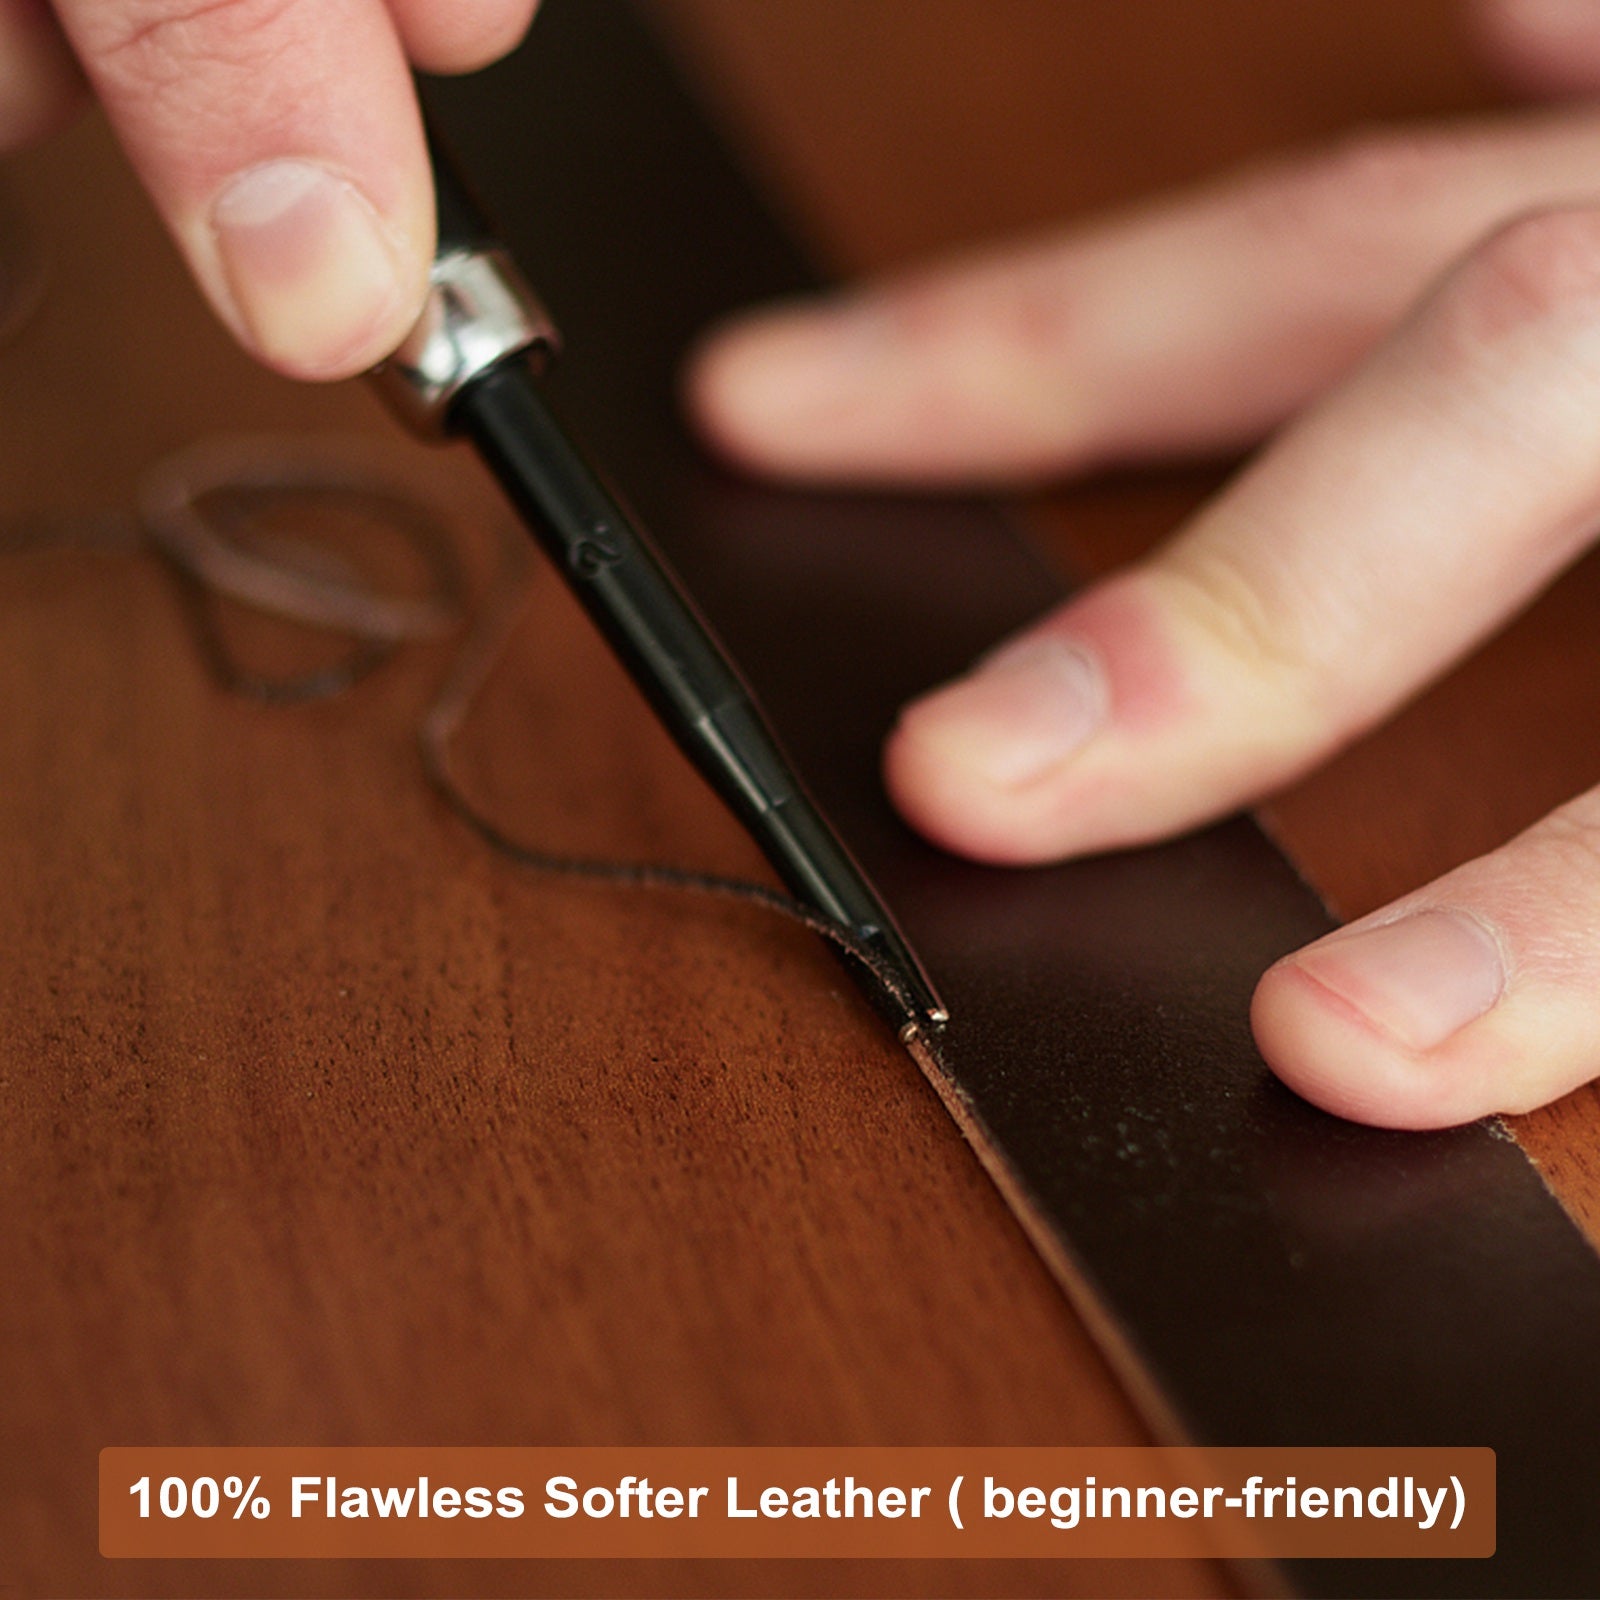 1 Bundle 5m Long Imitation Leather Strap 25mm Wide Foldover Leather Belt Strips for DIY Arts & Craft Projects (Black)